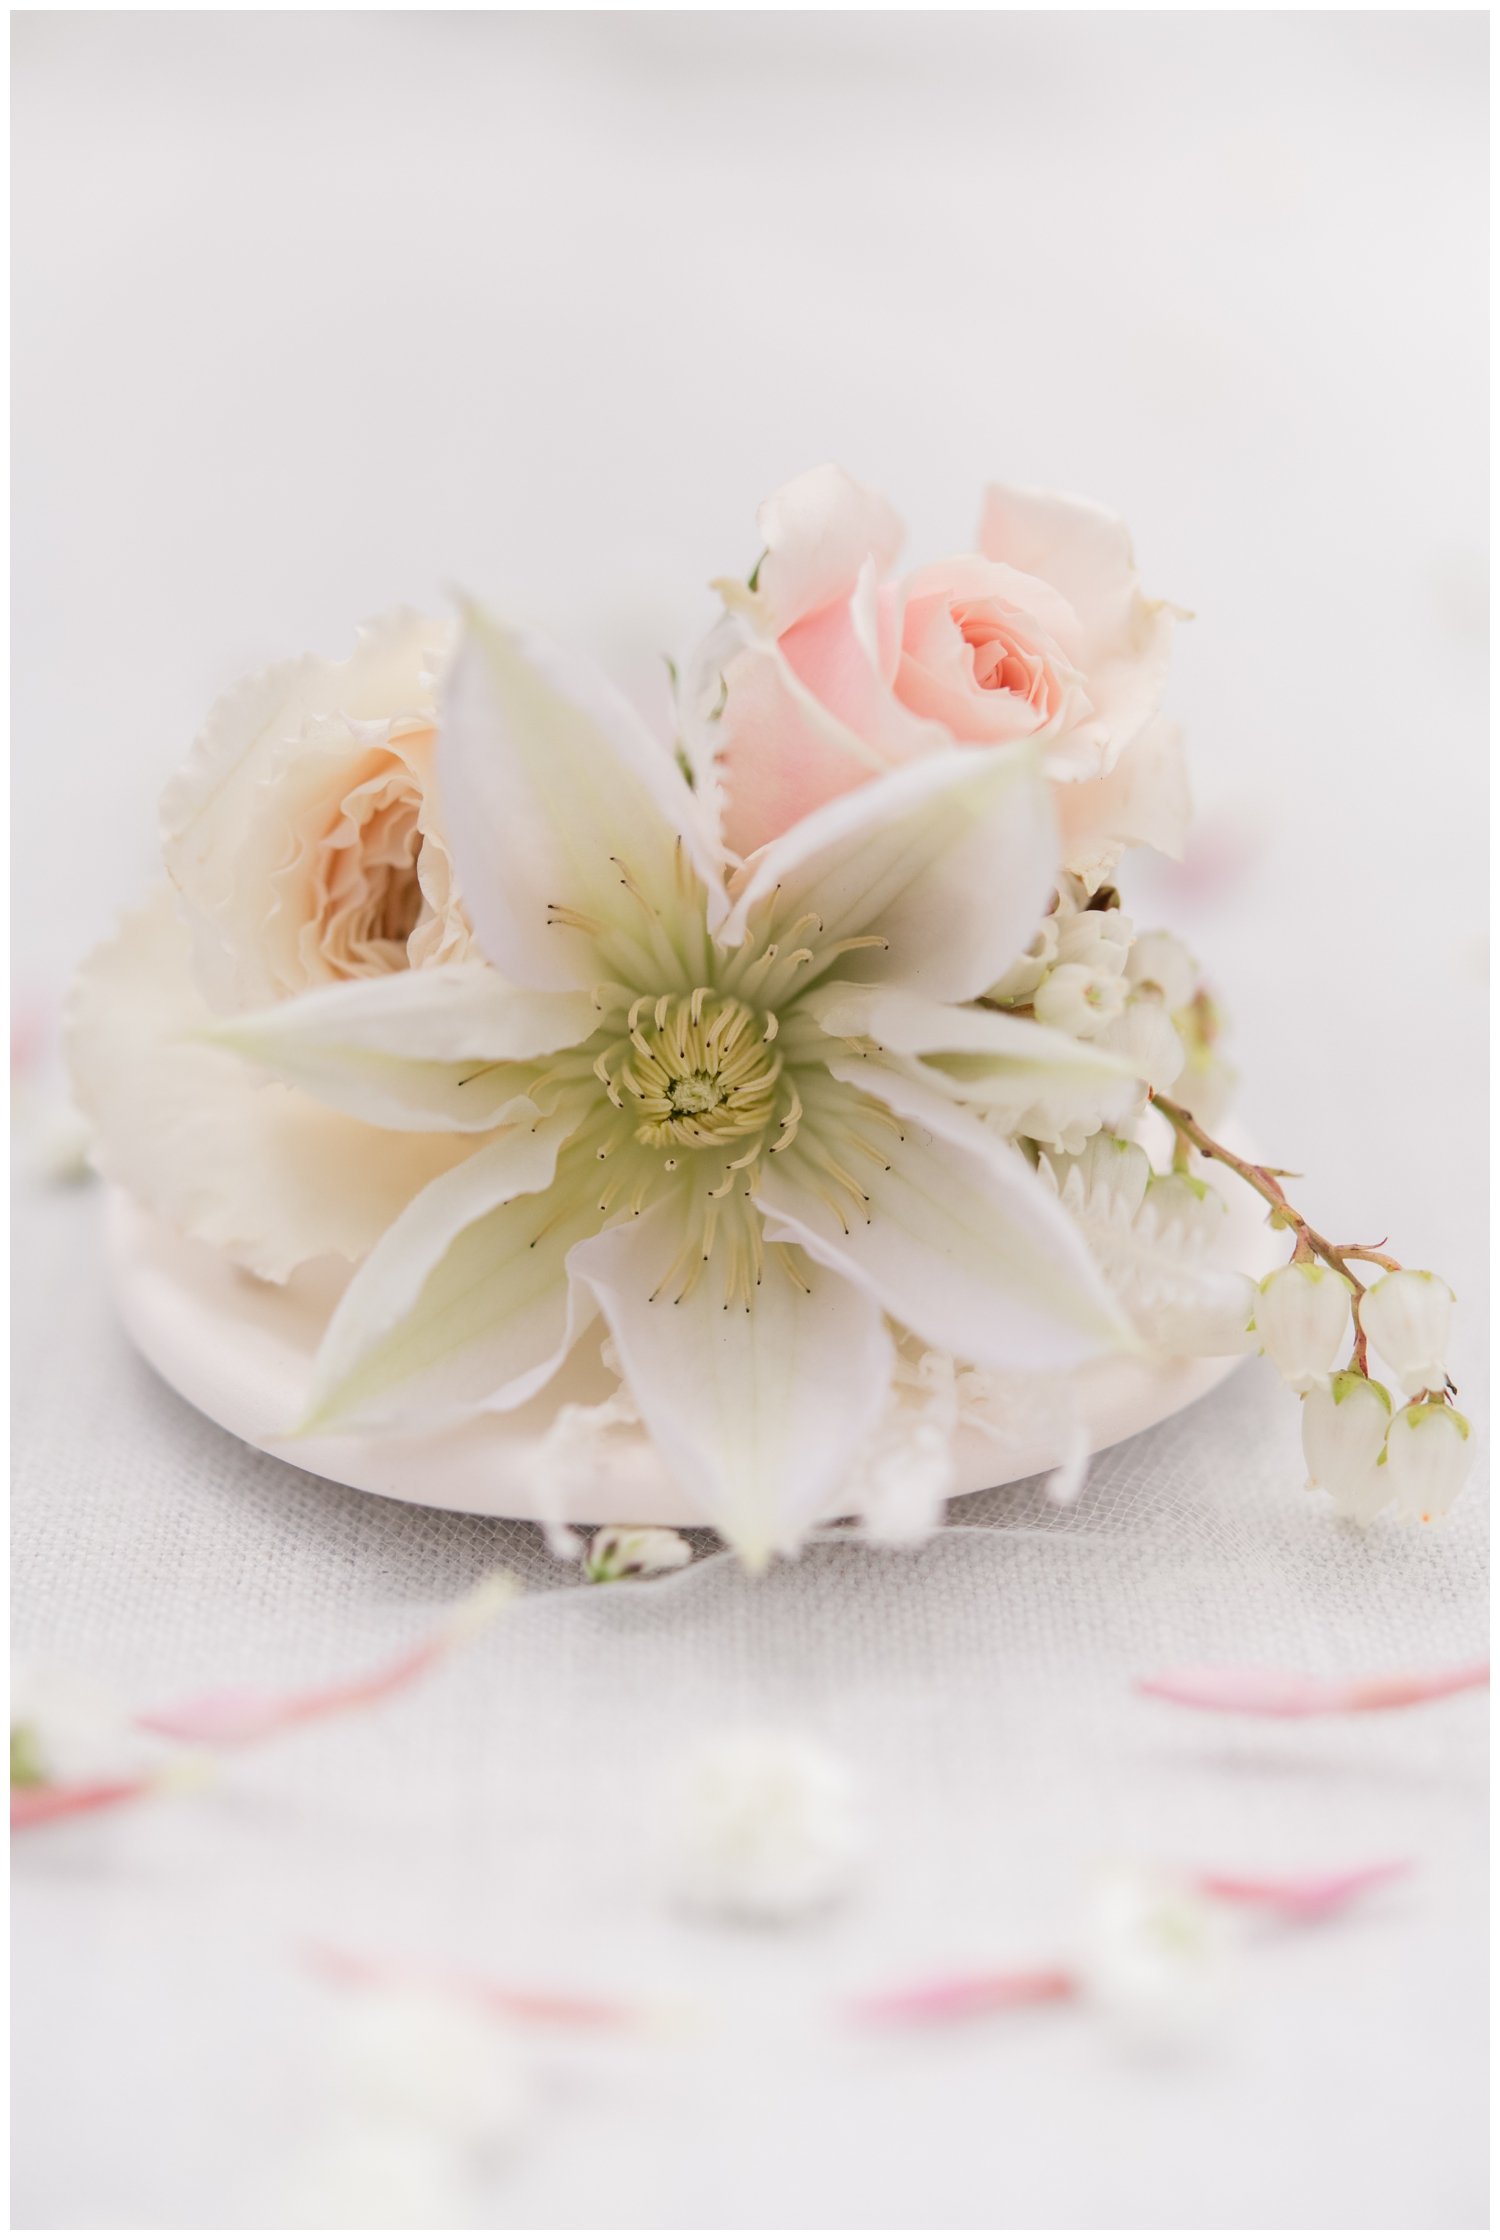 white floral petal in white ceramic dish